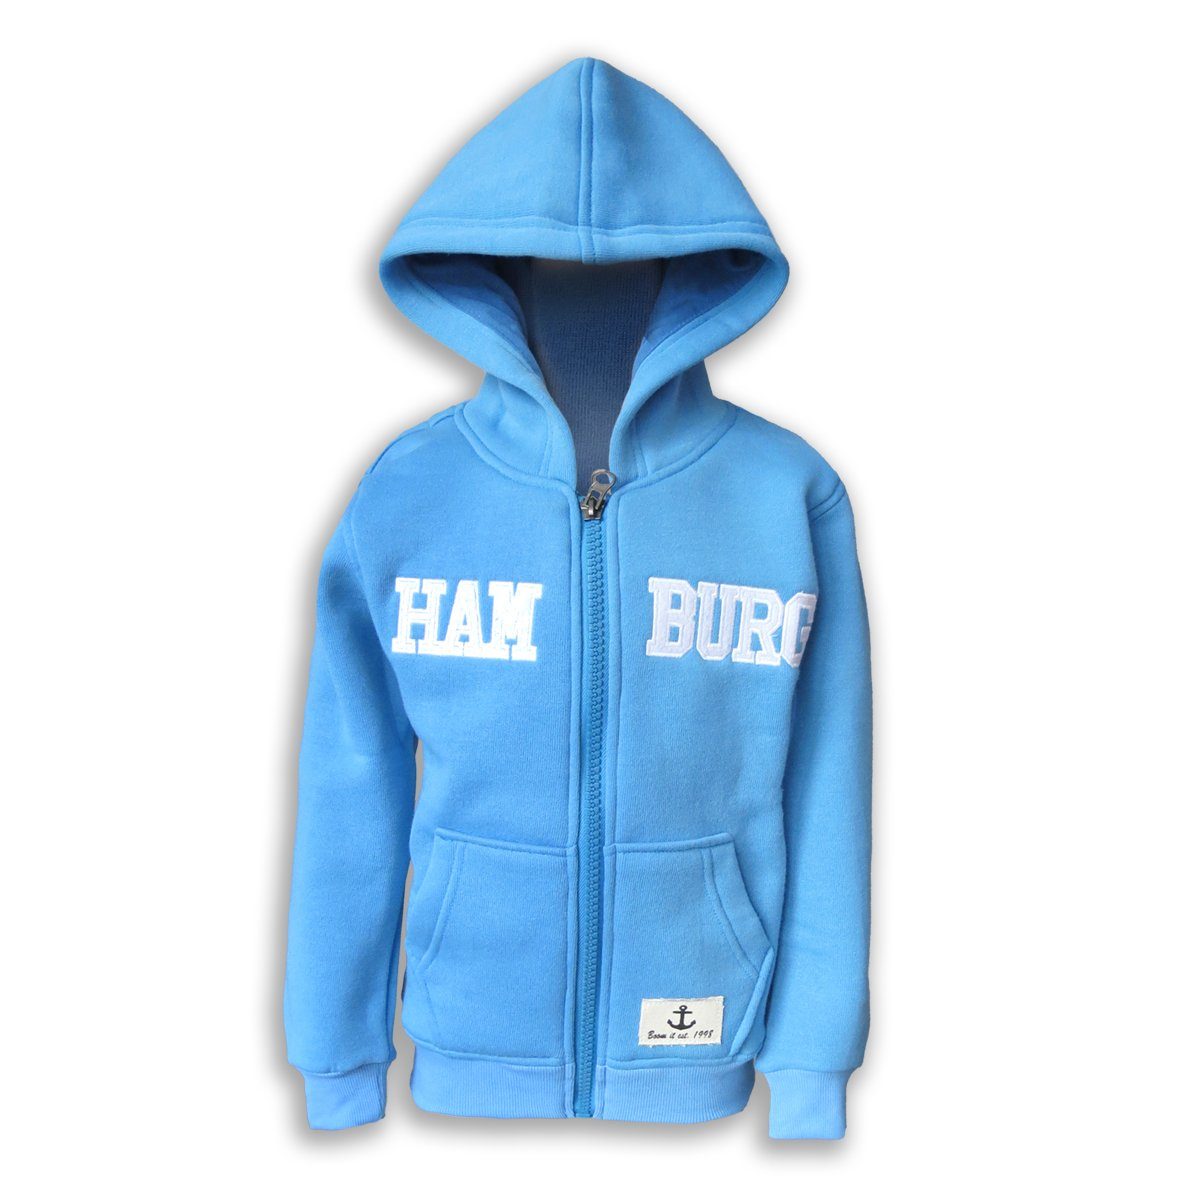 Jacke bestickt Hoodie unifarben Kinder "Hamburg" Originelli T-Shirt hellblau Sweatjacke Sonia